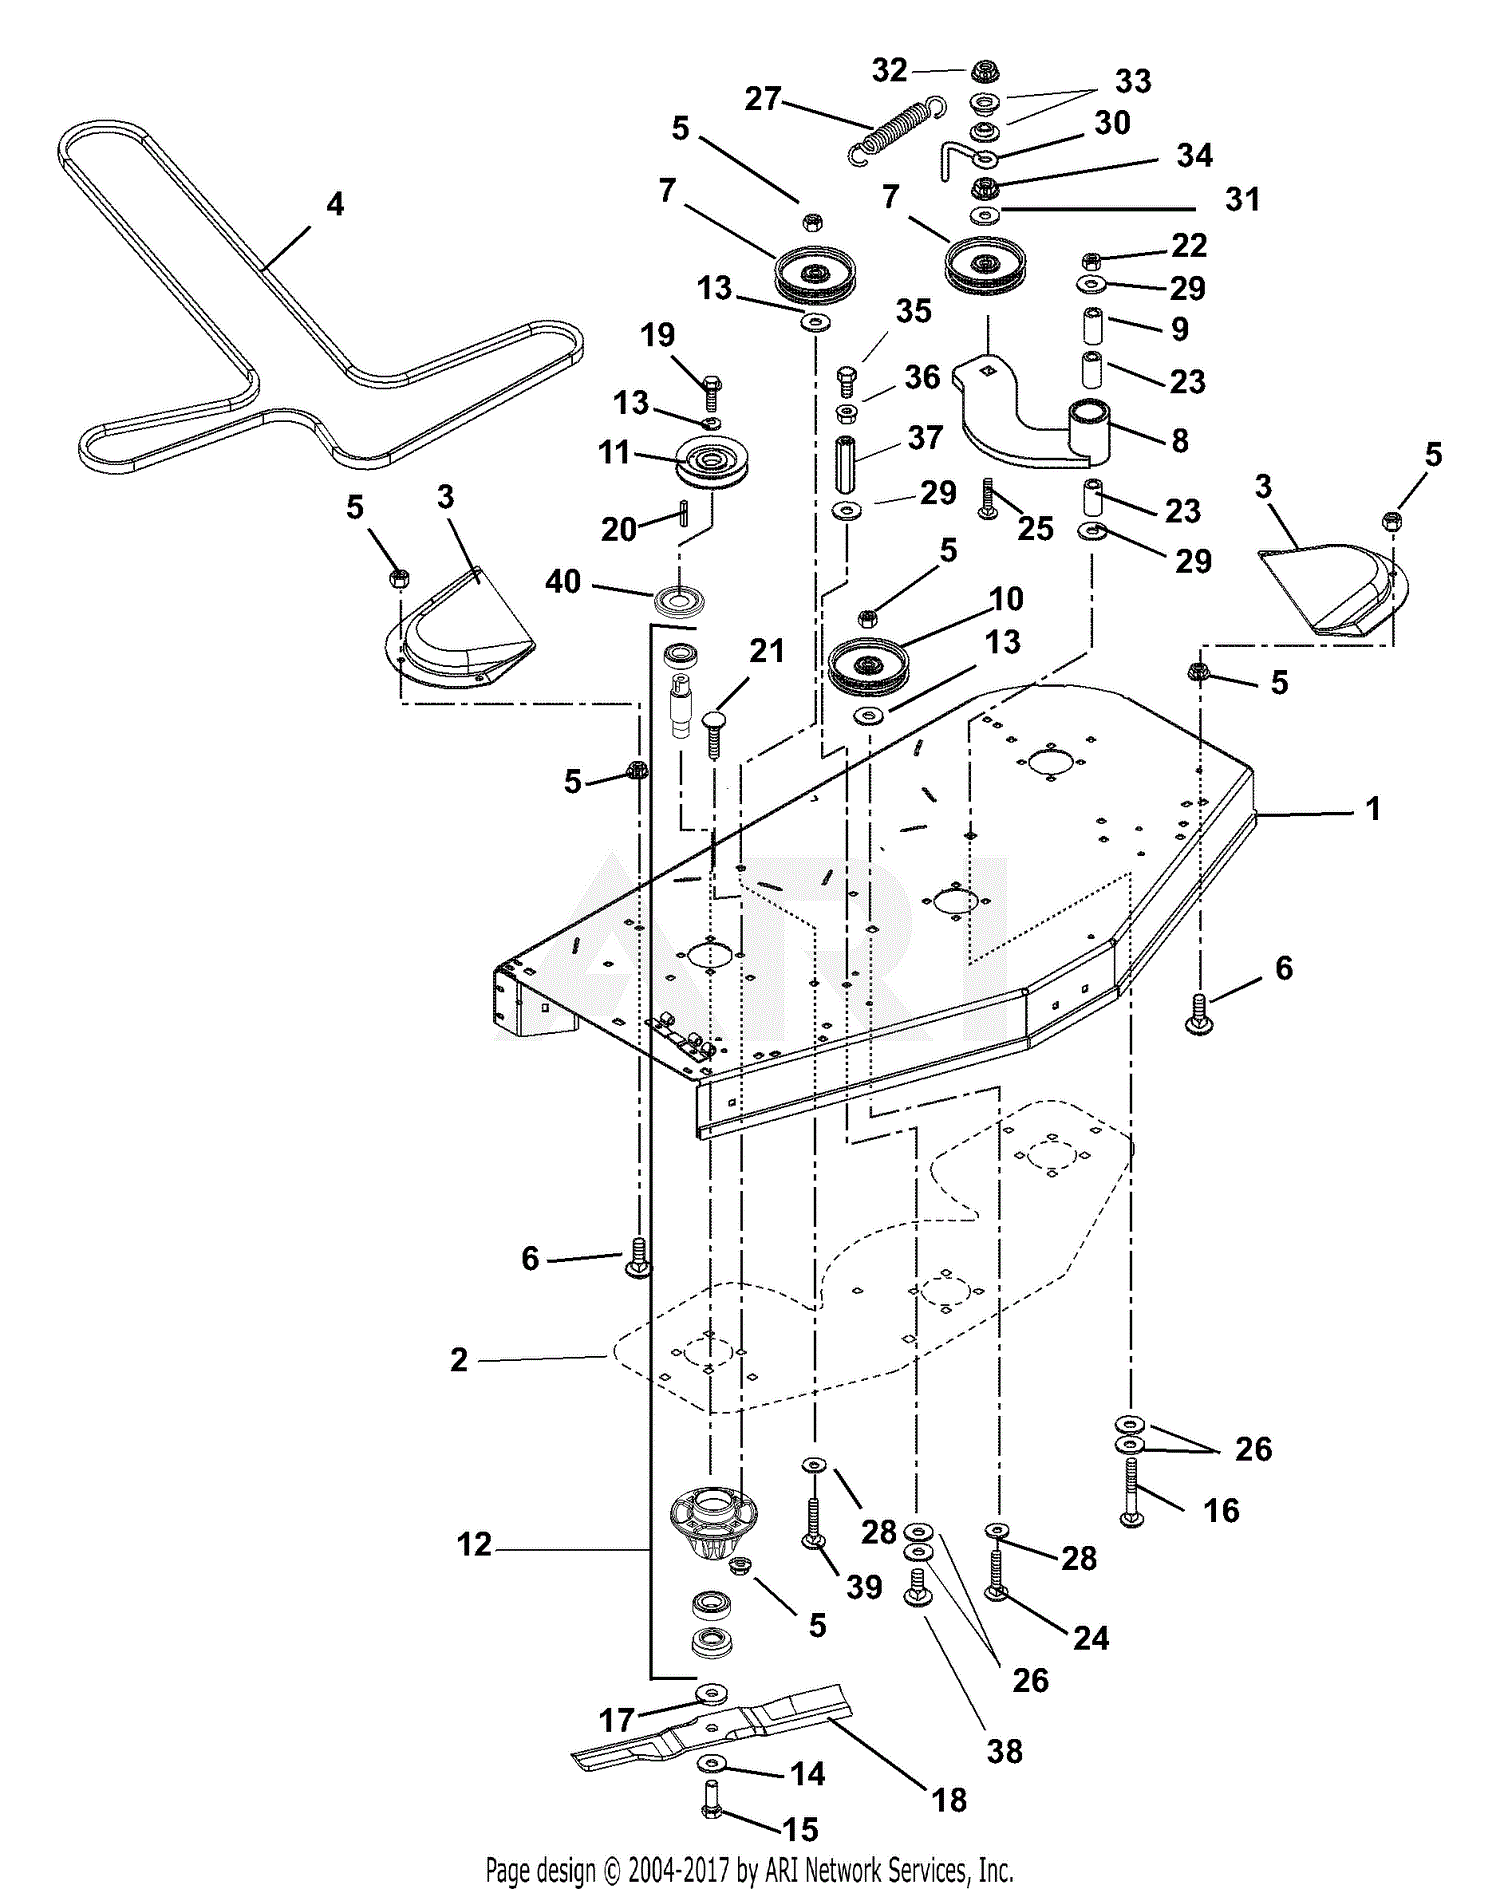 Gravely 915074 020000 Zt 1640 16hp Kohler 40 Deck Parts Diagram For Mower Deck Belt Idlers And Blades Sn 025000 Up